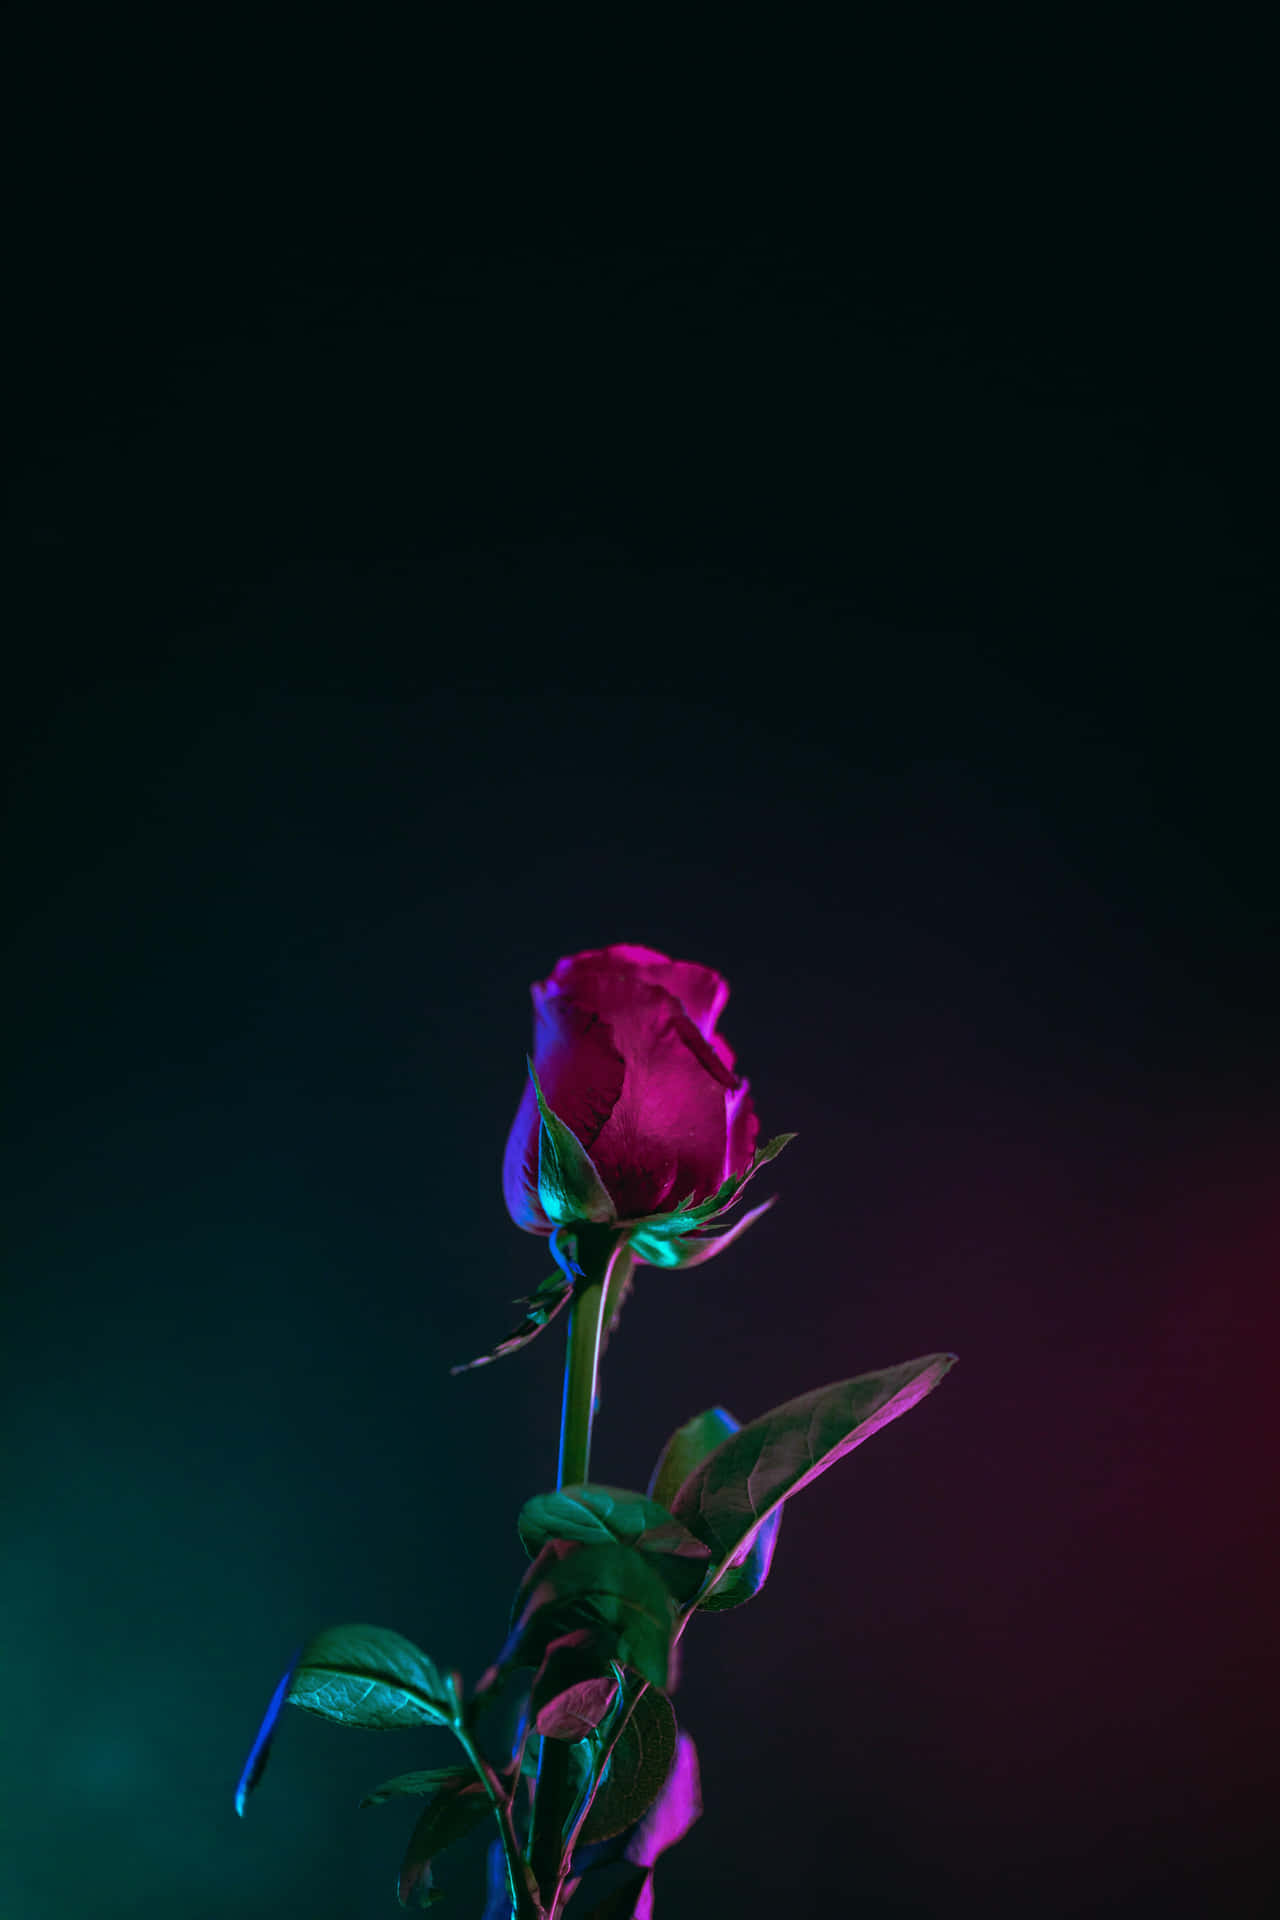 Dark Pink Rose Against Gradient Backdrop.jpg Wallpaper